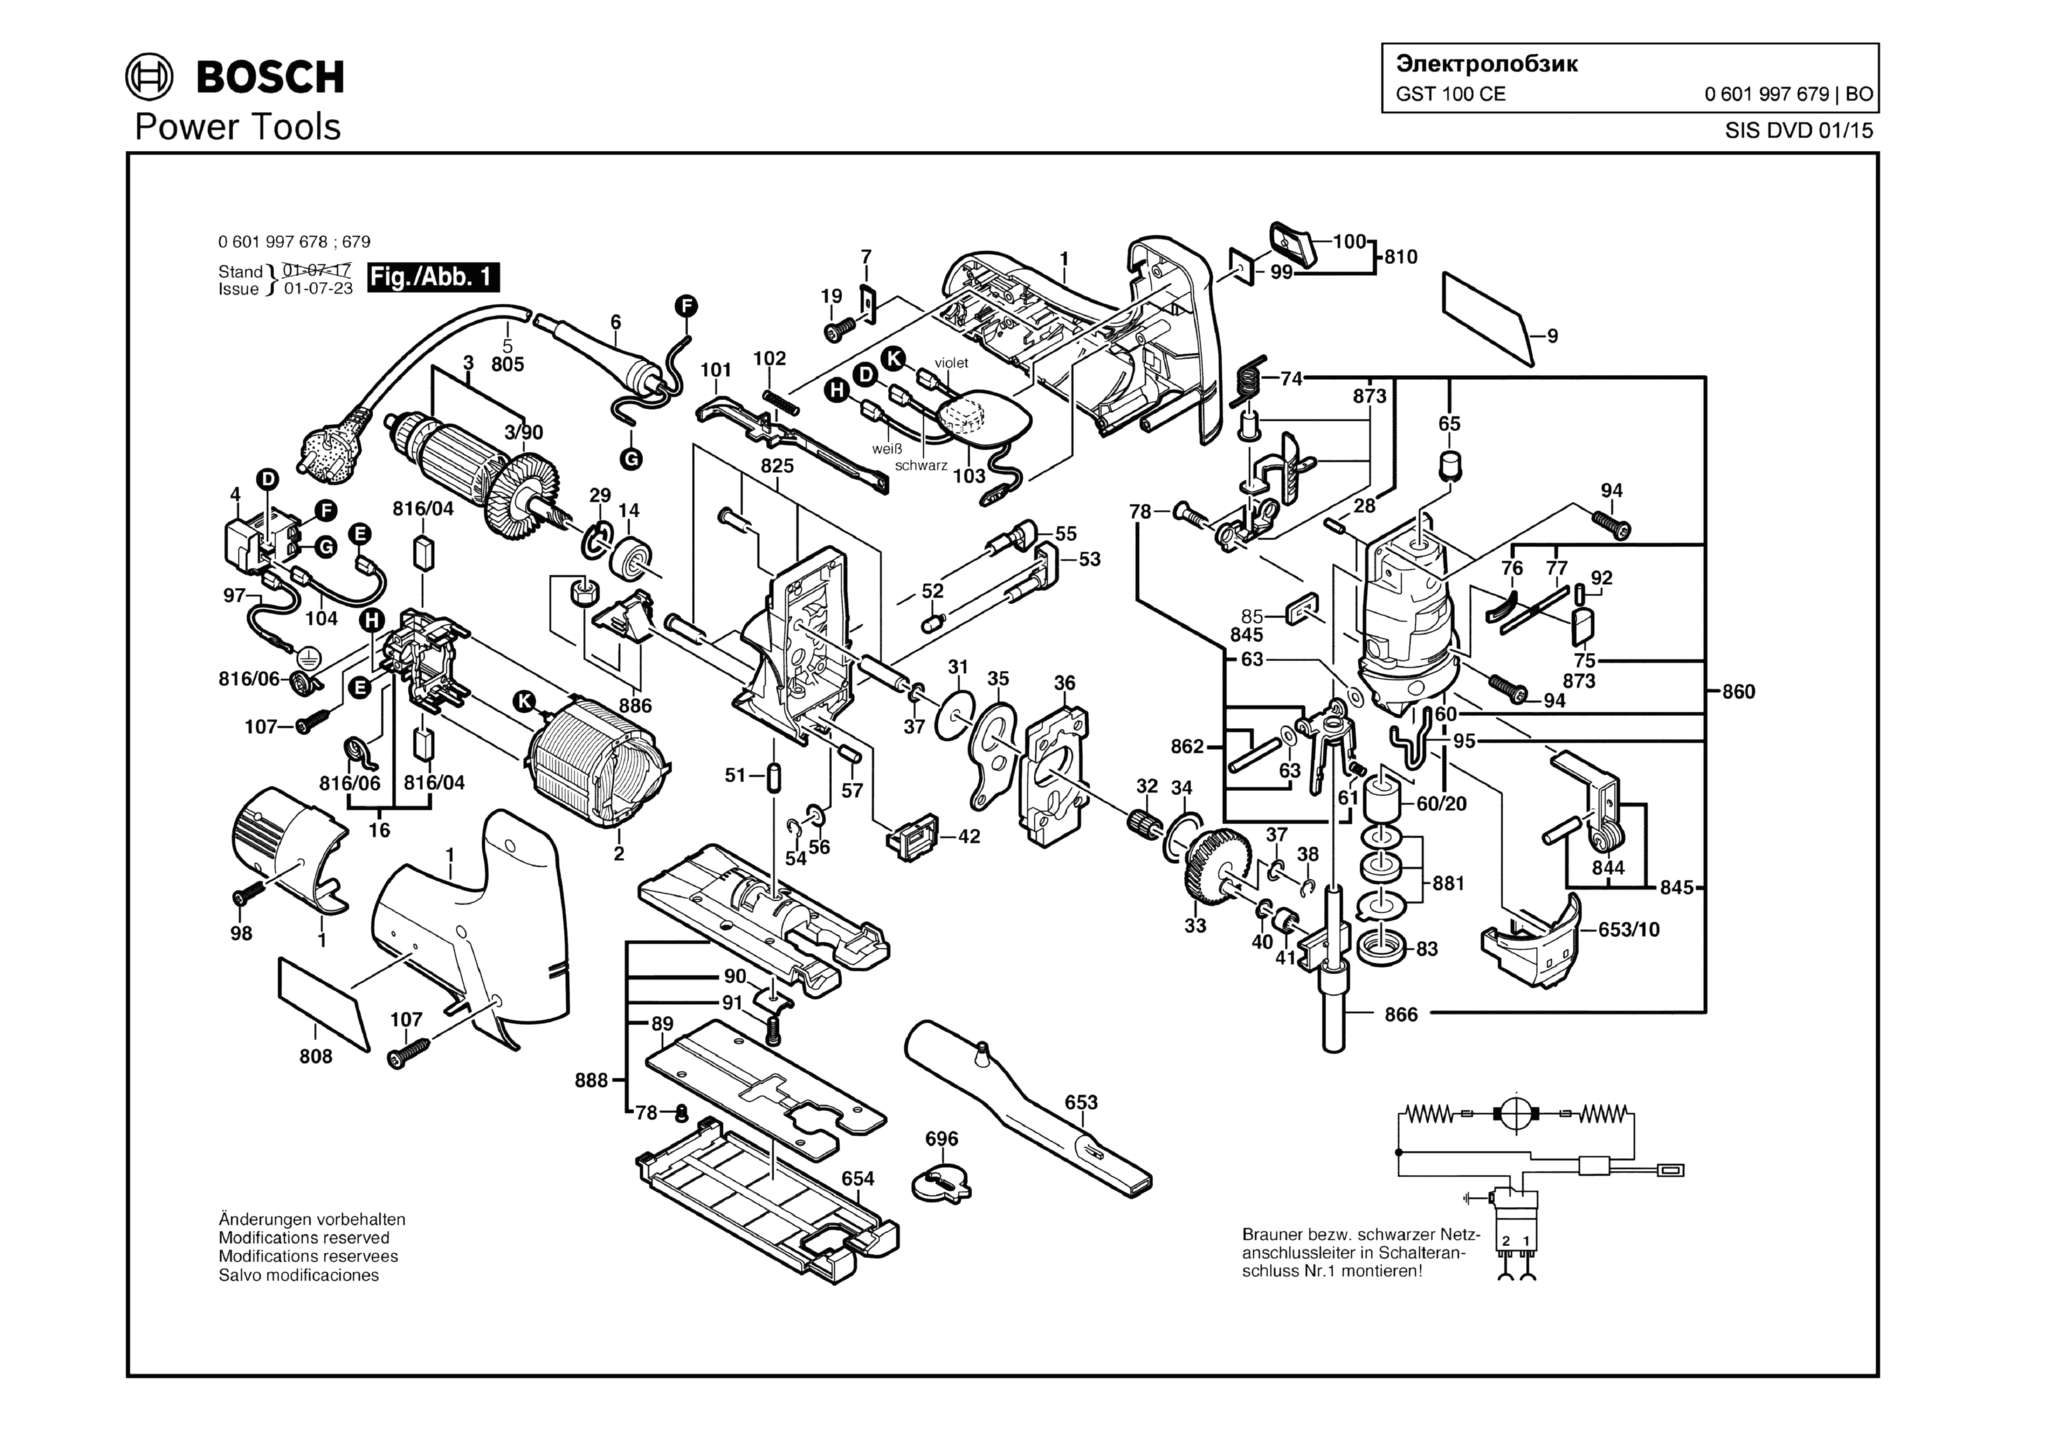 Запчасти, схема и деталировка Bosch GST 100 CE (ТИП 0601997679)